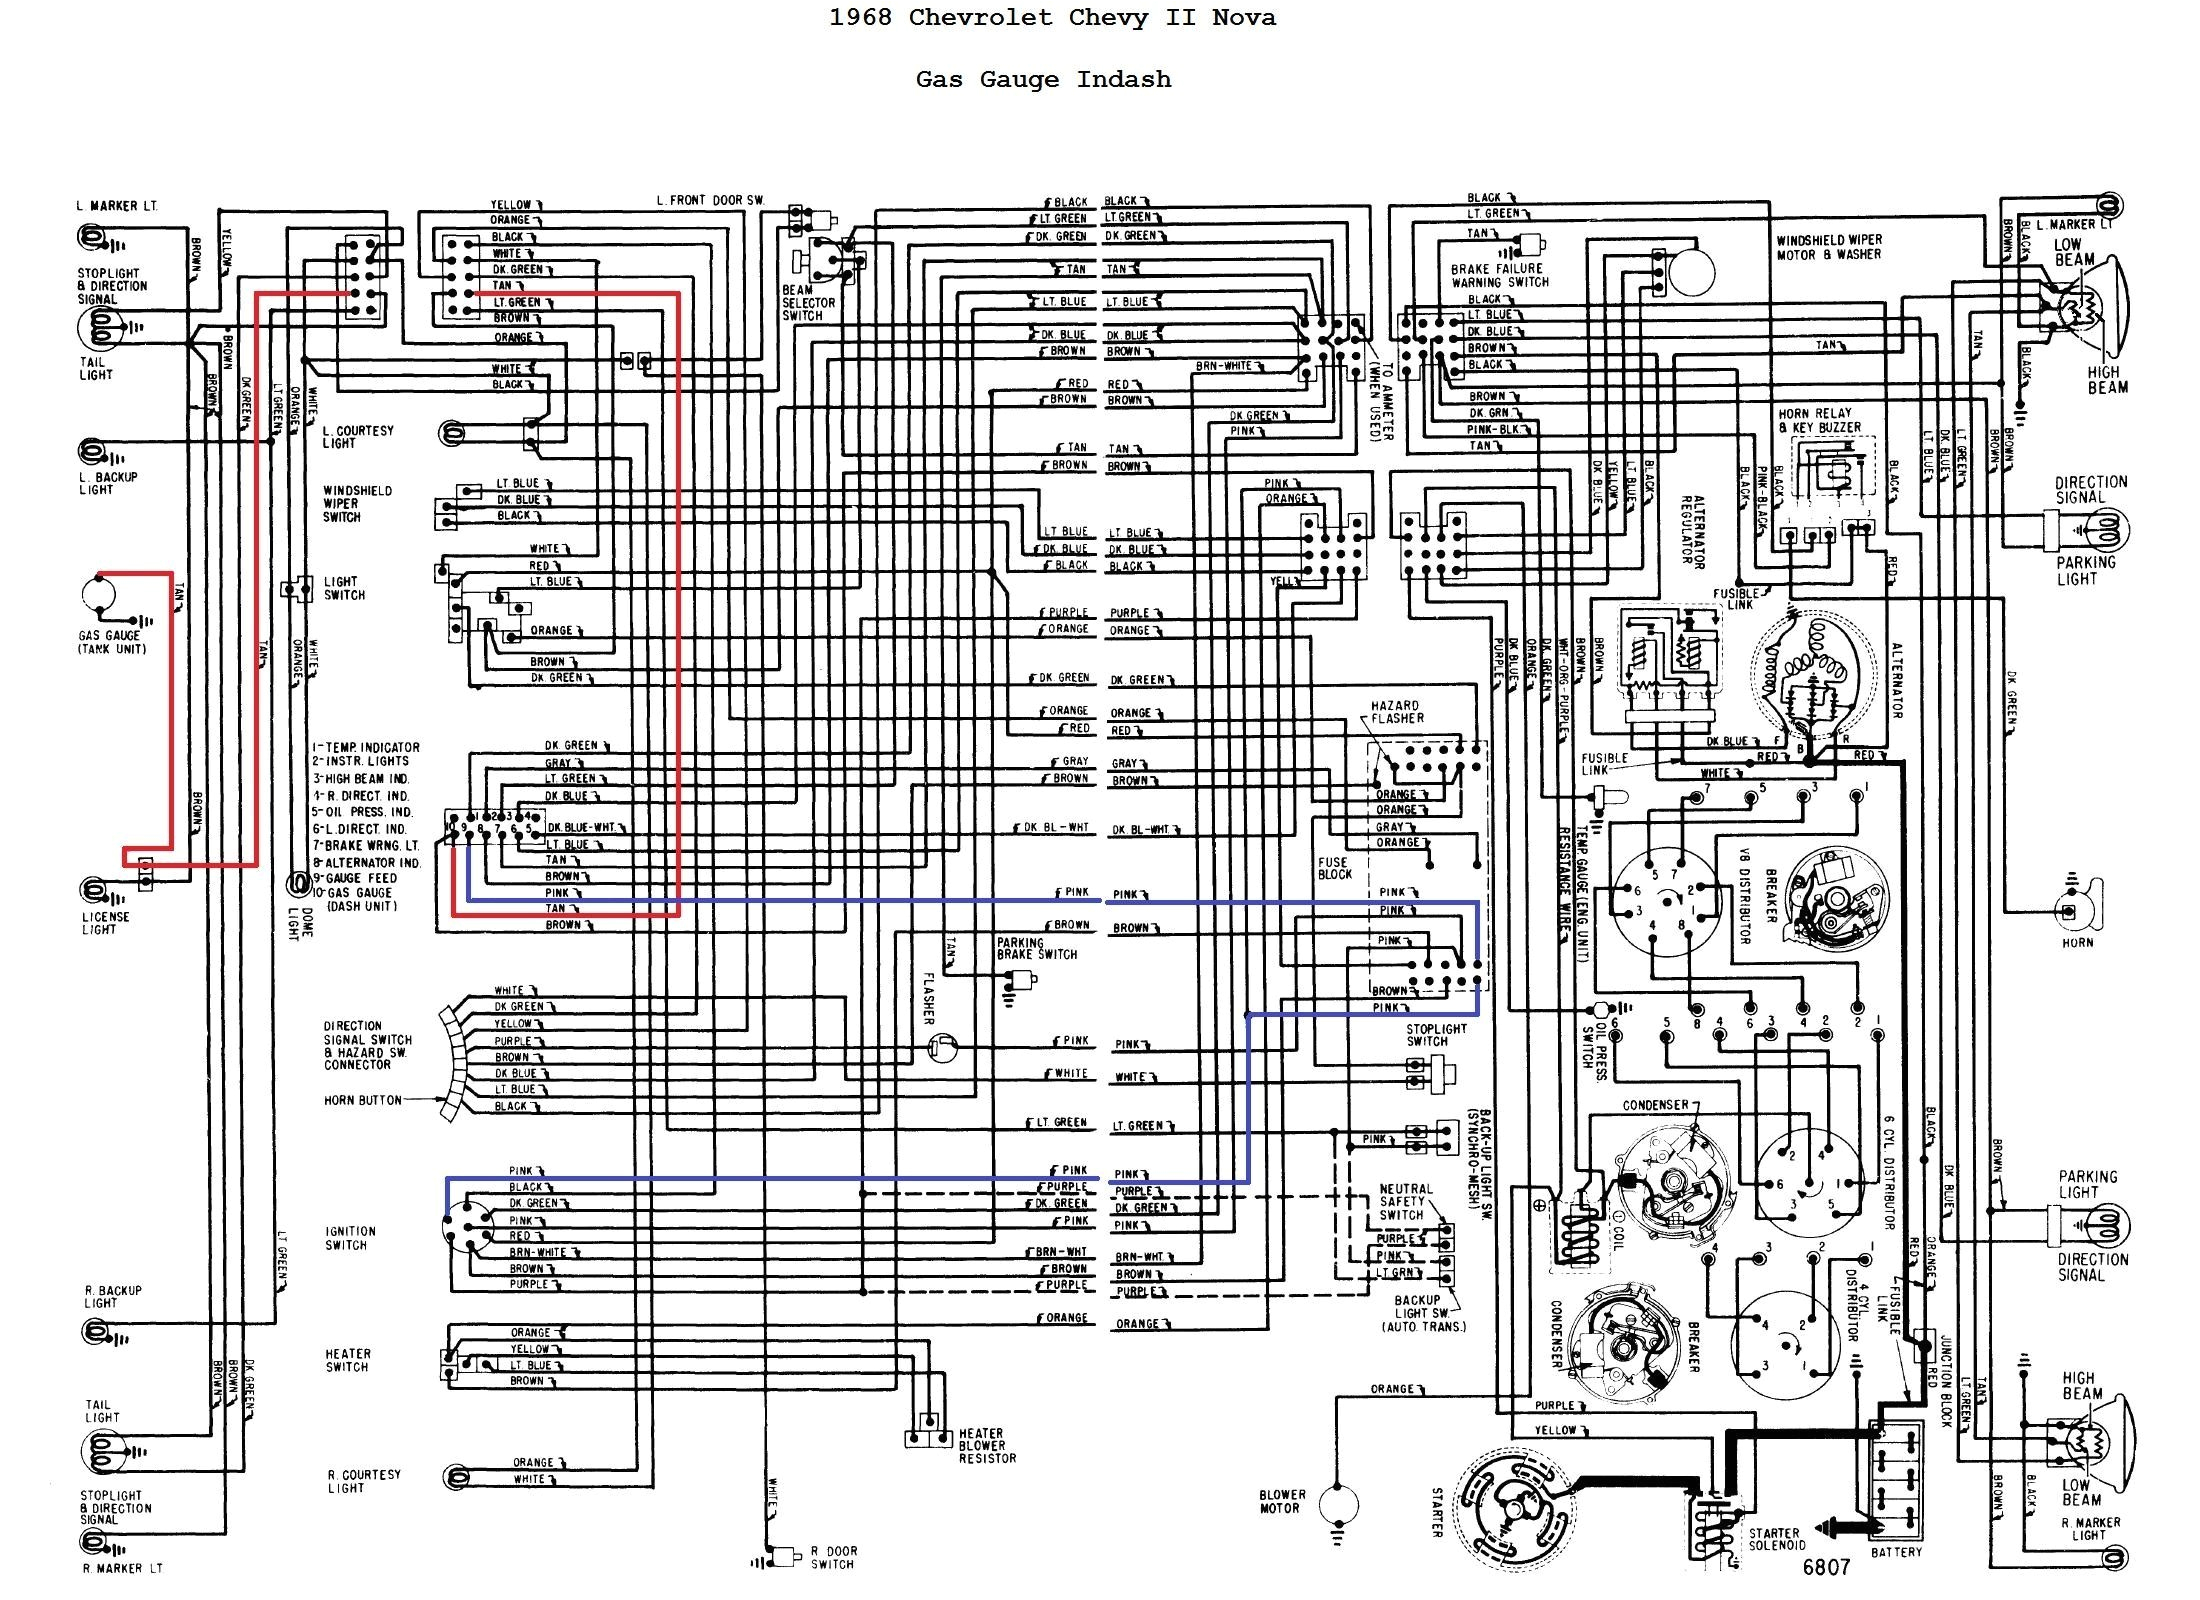 68 gmc wiring harness diagram wiring diagram review 68 gmc wiring harness diagram